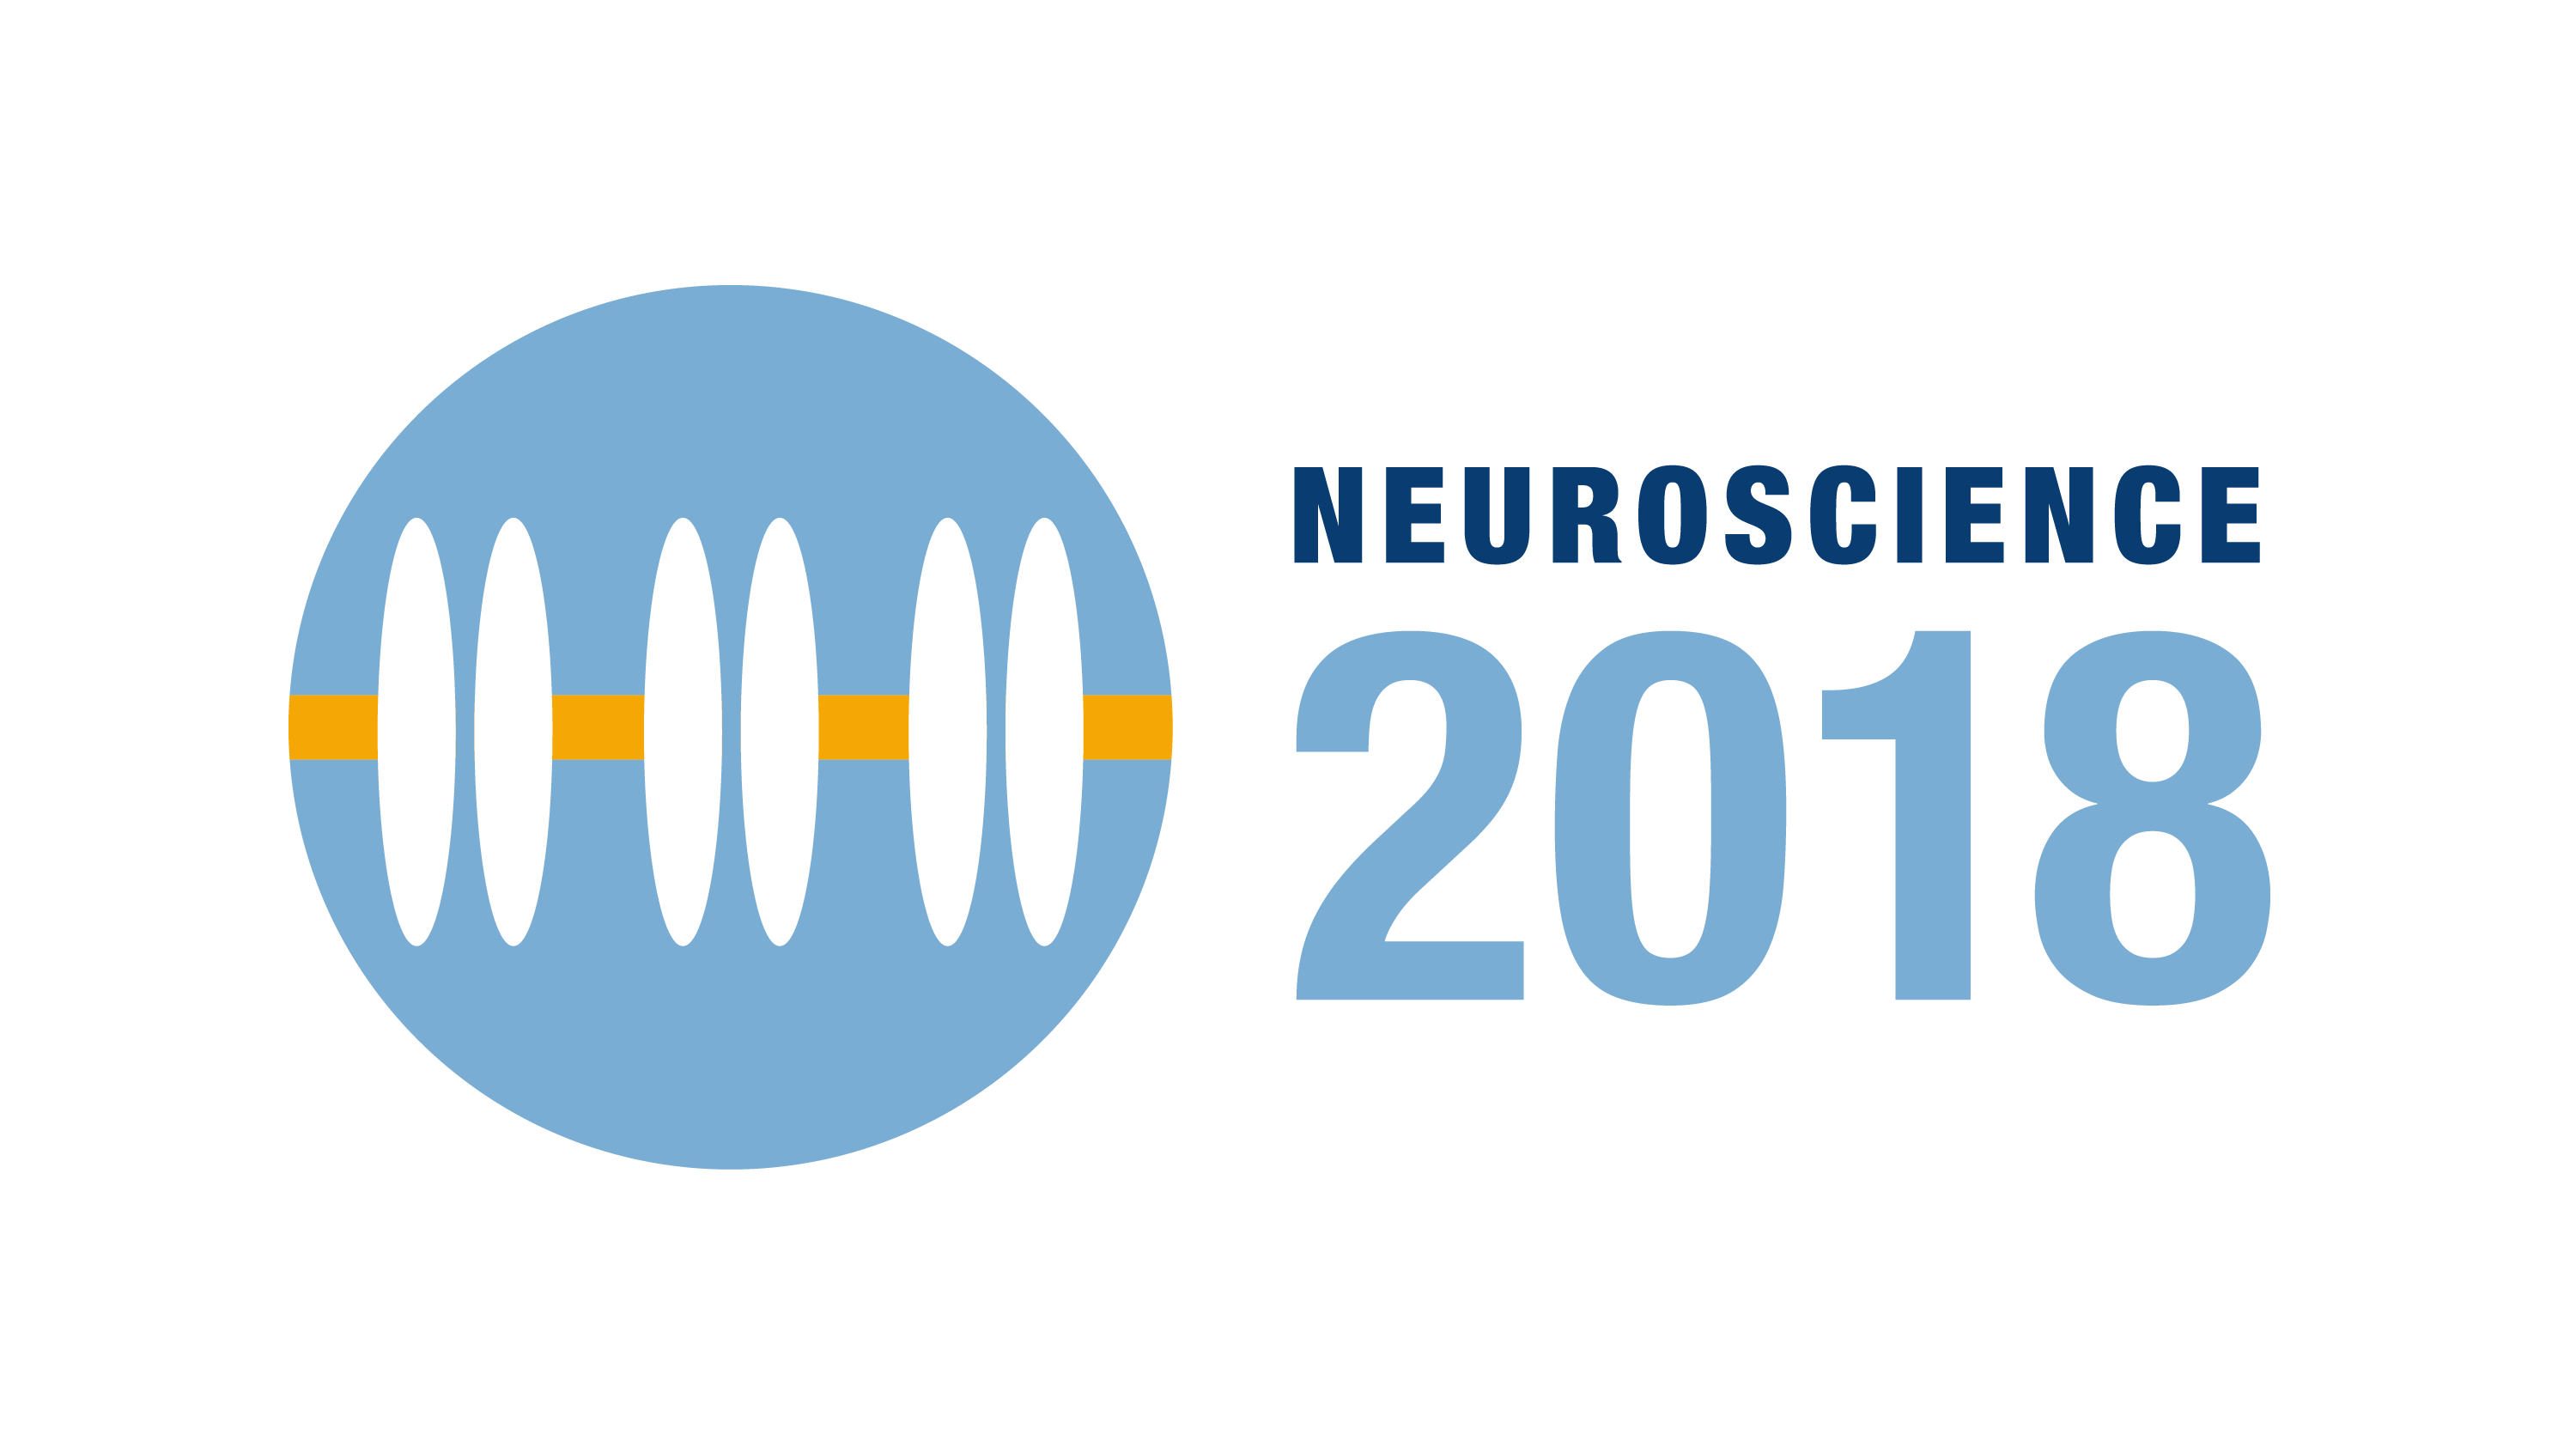 Neuroscience Logo - Society for Neuroscience - Past and Future Annual Meetings